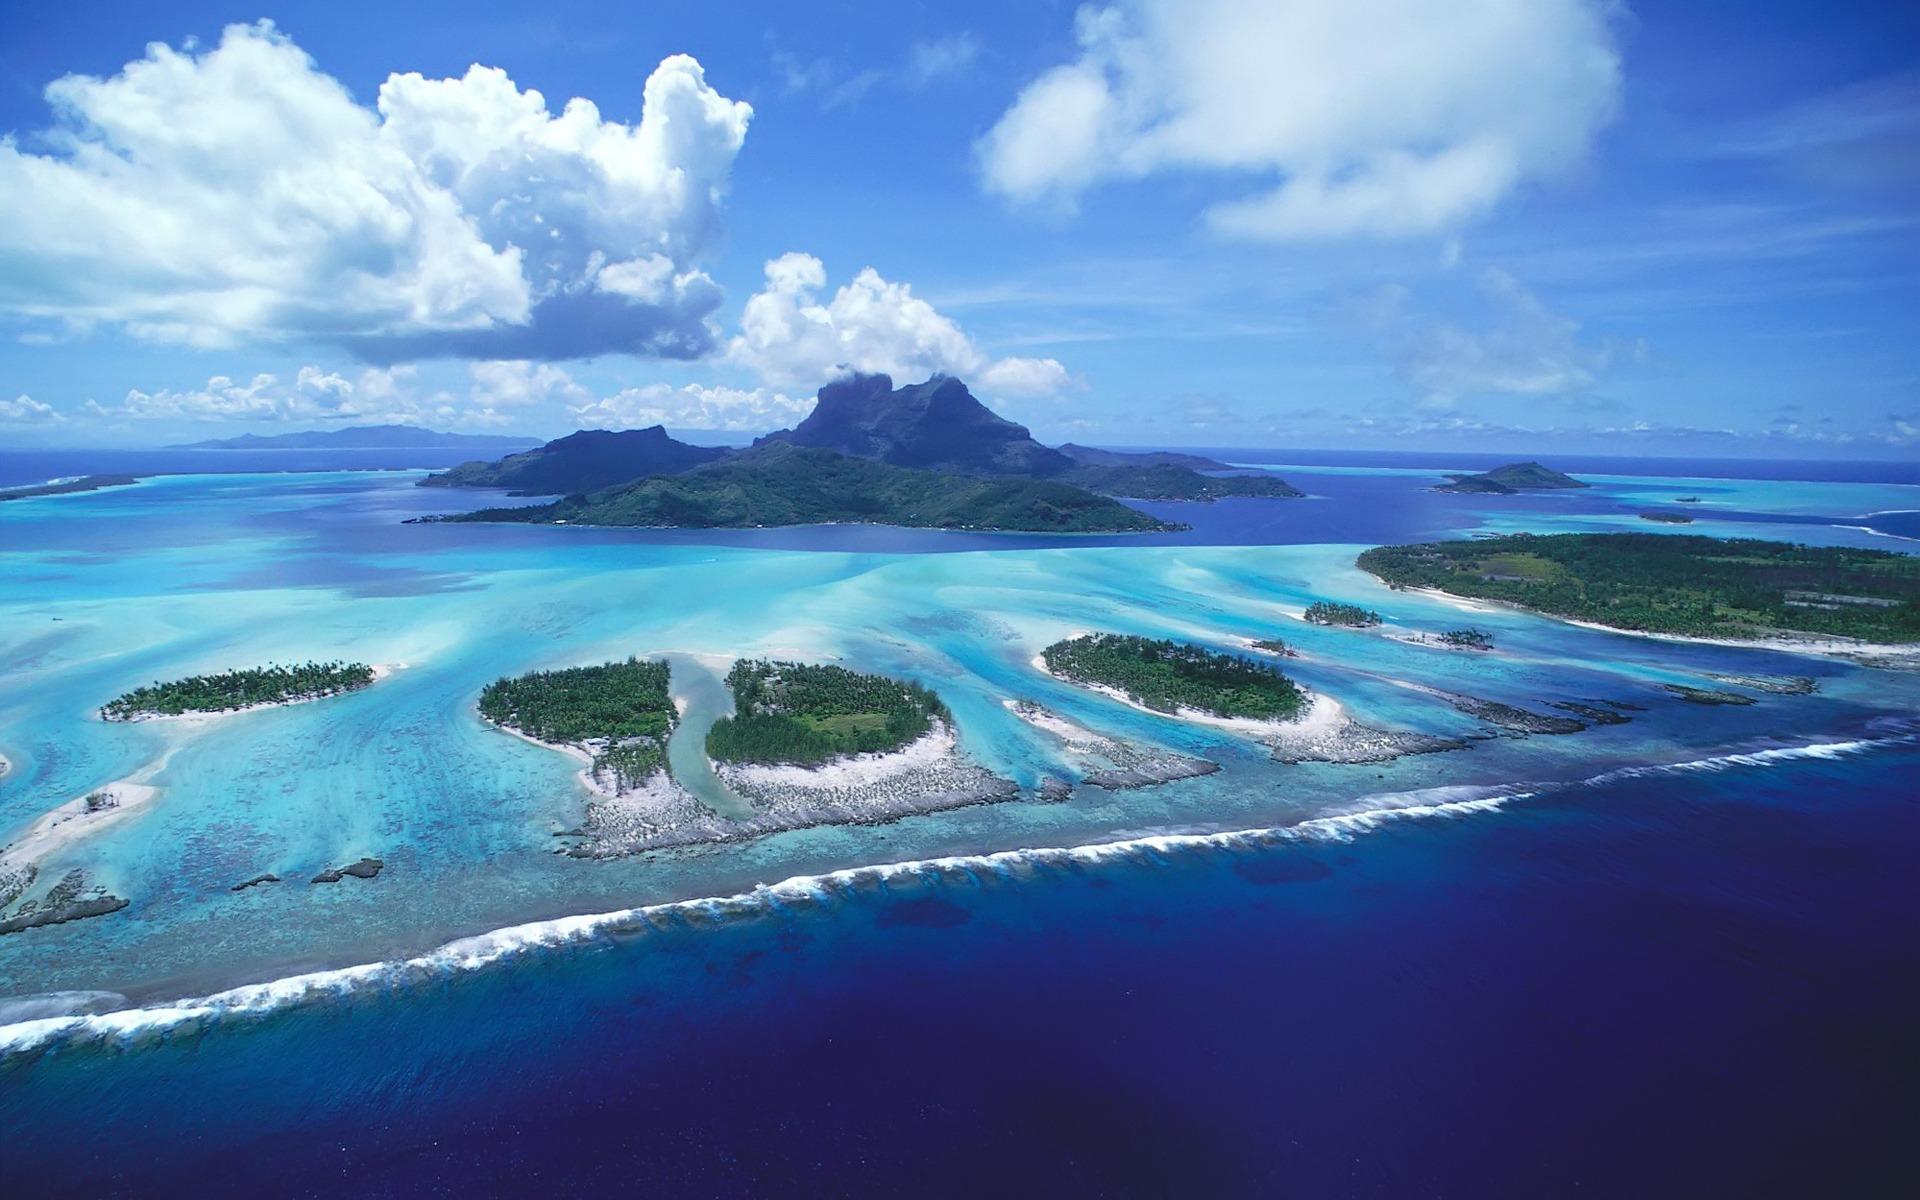 Long Way To Bay Tropical Island Wallpaper Image For Desktop Taken